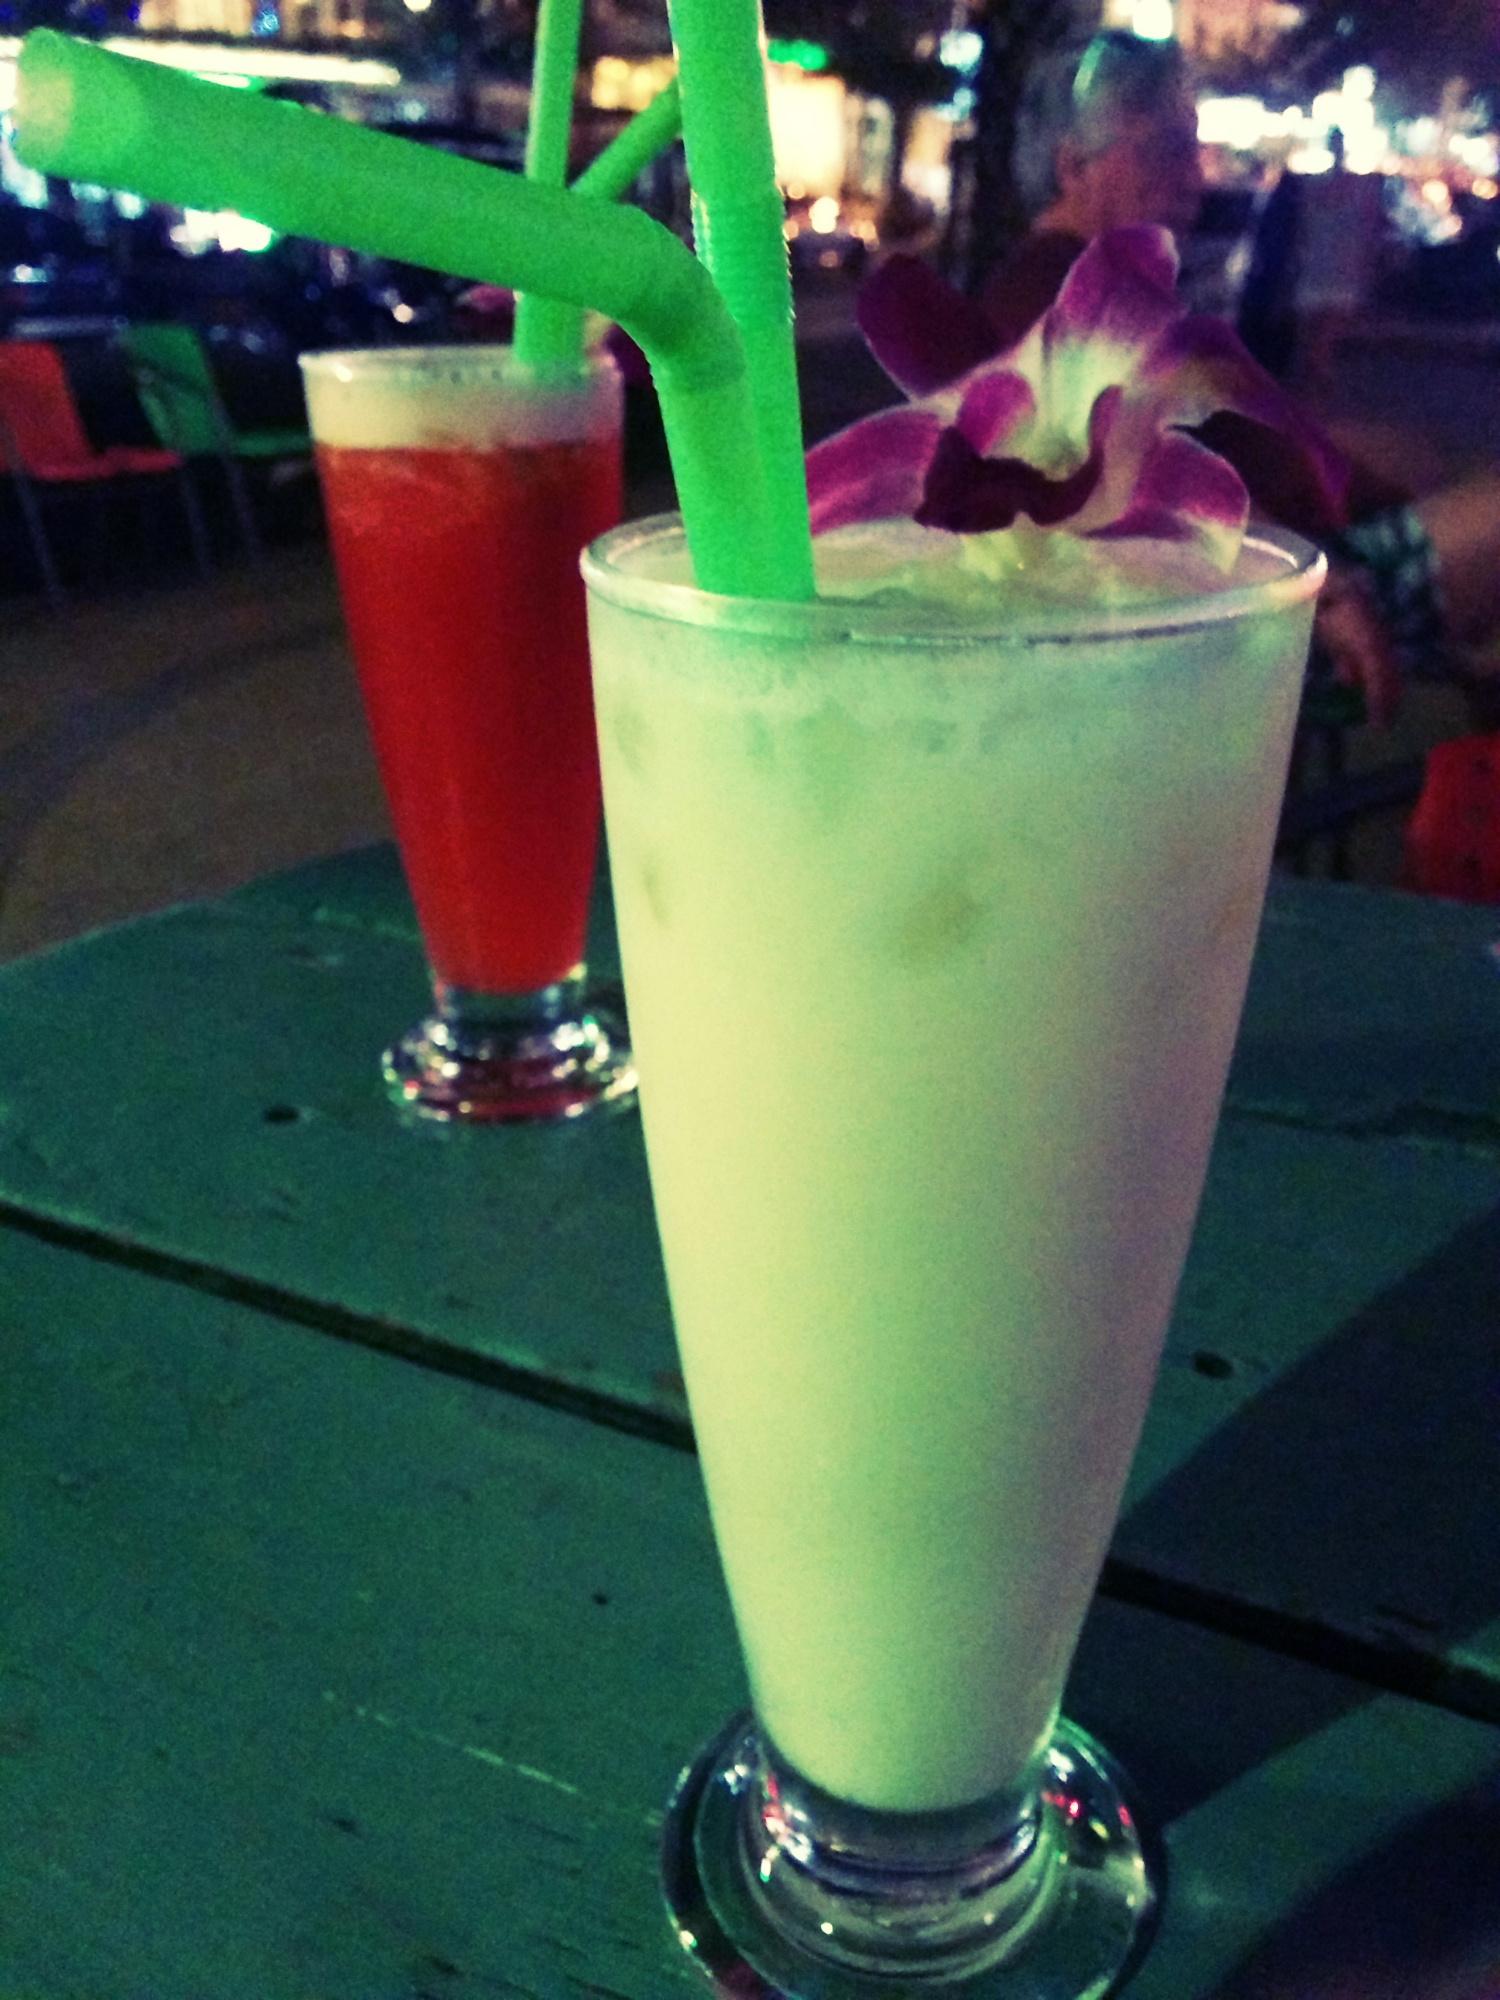 Tasty cocktails at the Reggae bar